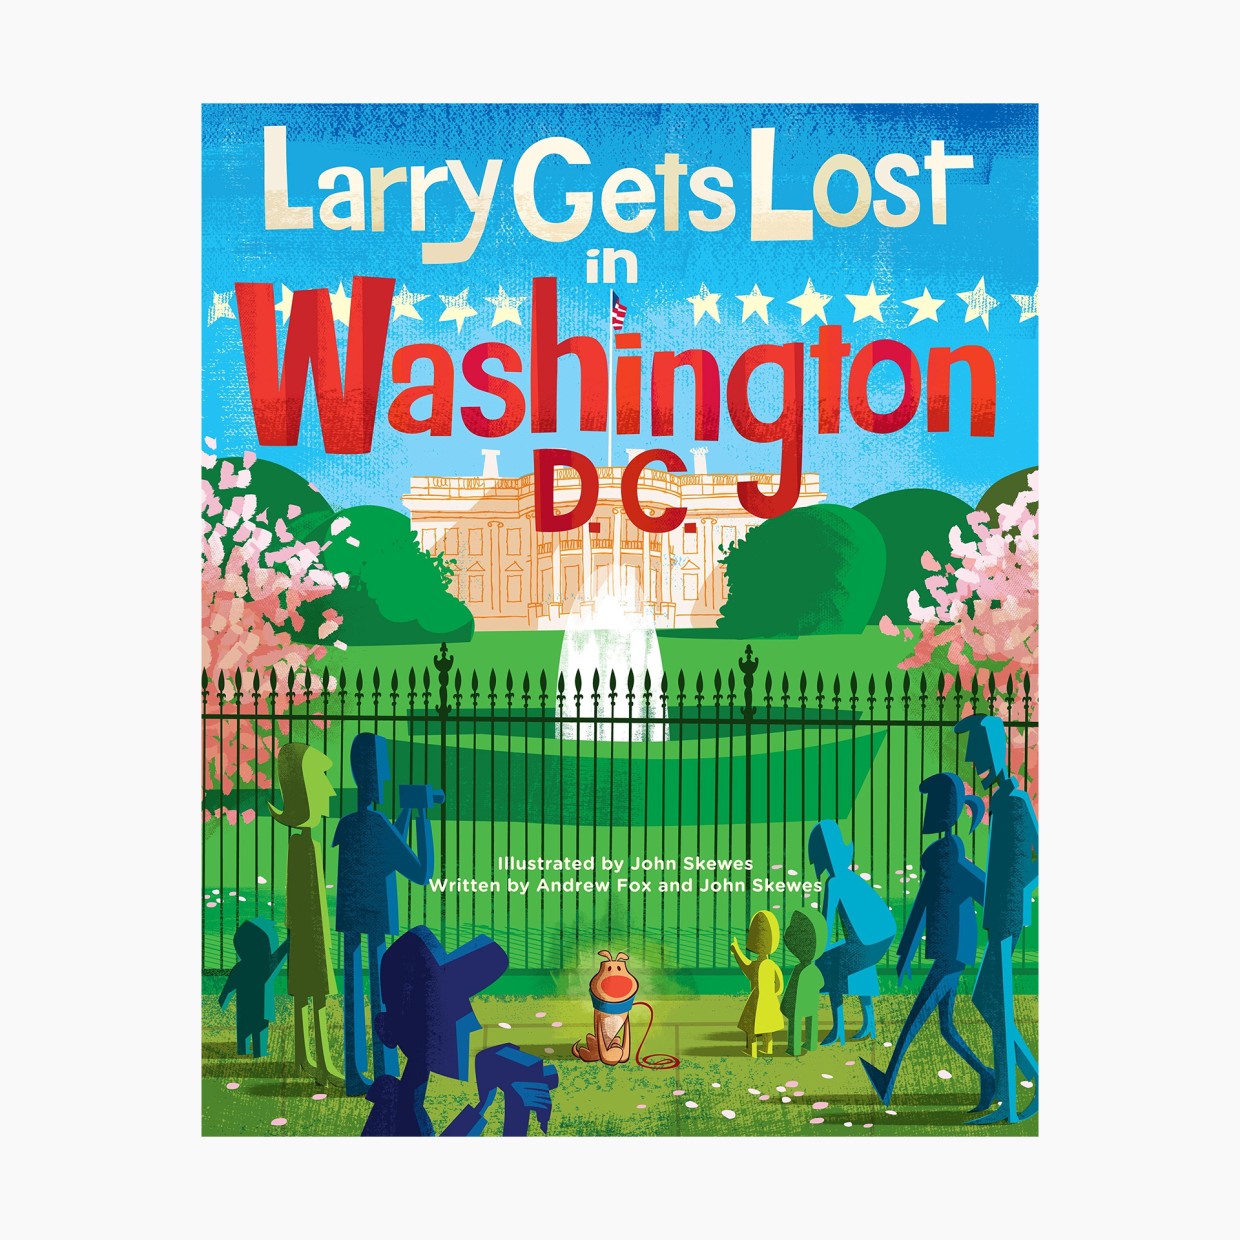 Larry Gets Lost in Washington D.C.